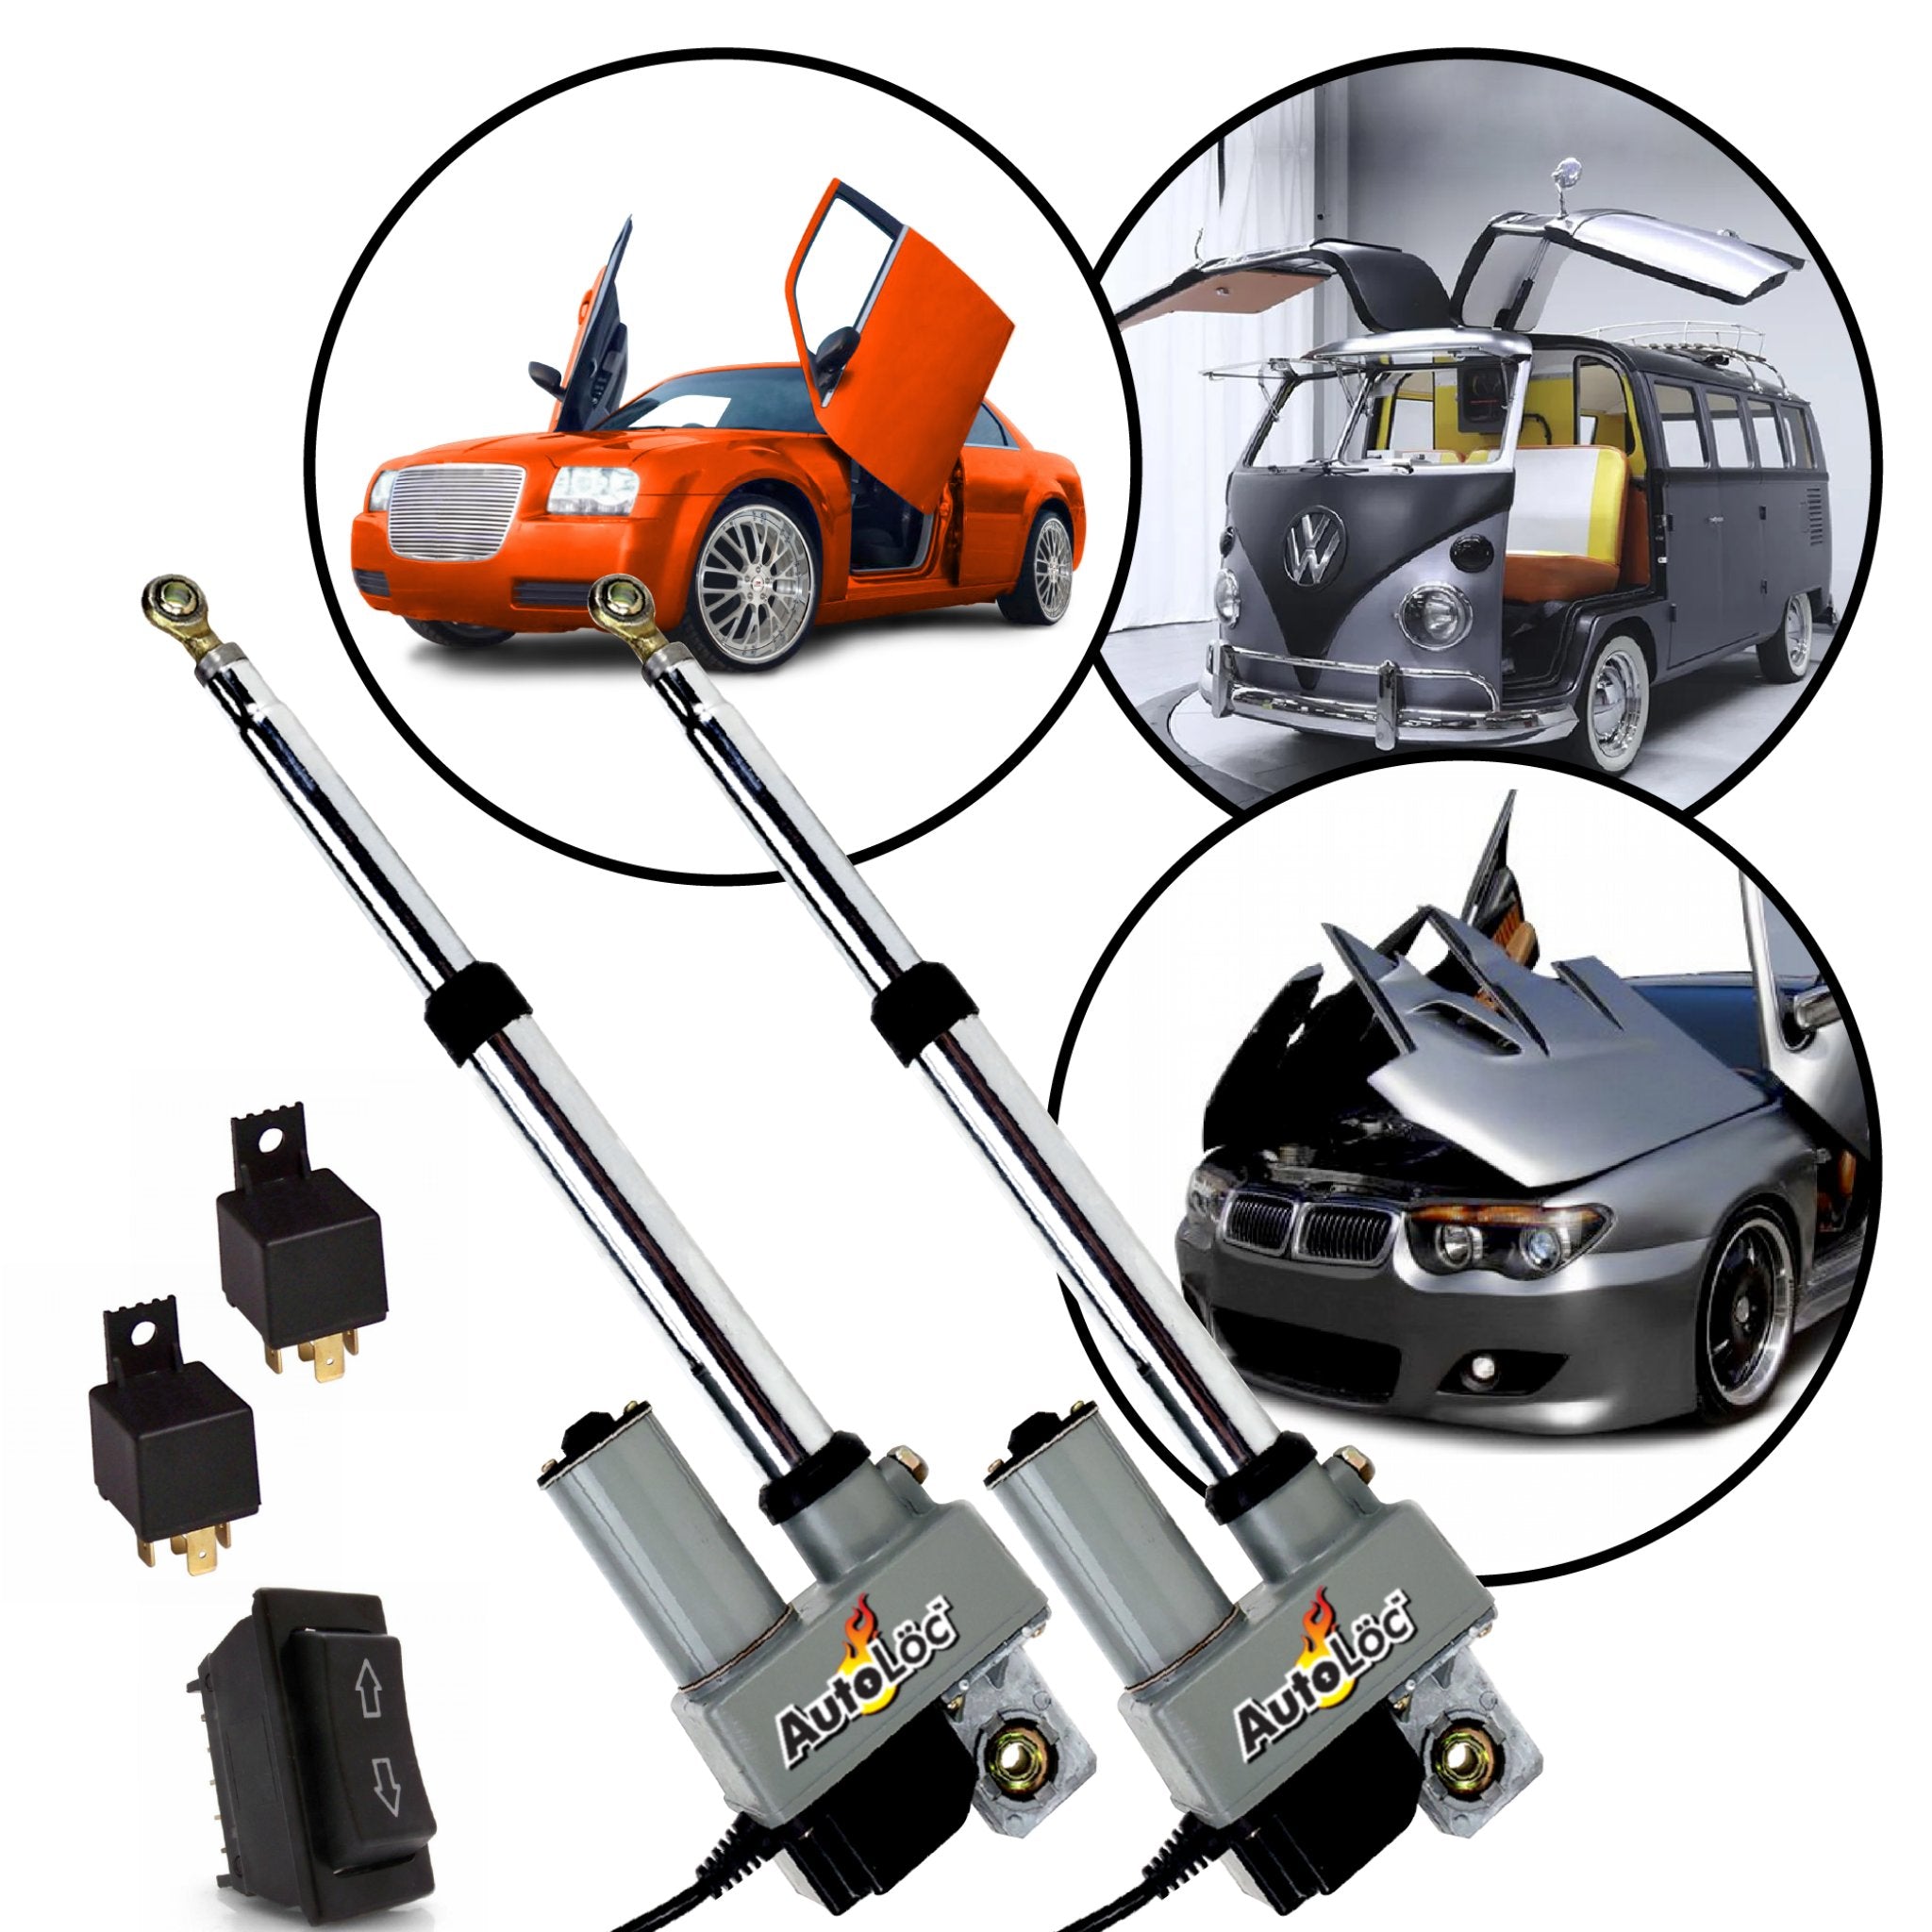 Kit de bisagras eléctricas para puerta de coche automatizada de 2 puertas de alta resistencia para Lambo Gullwing Vertical